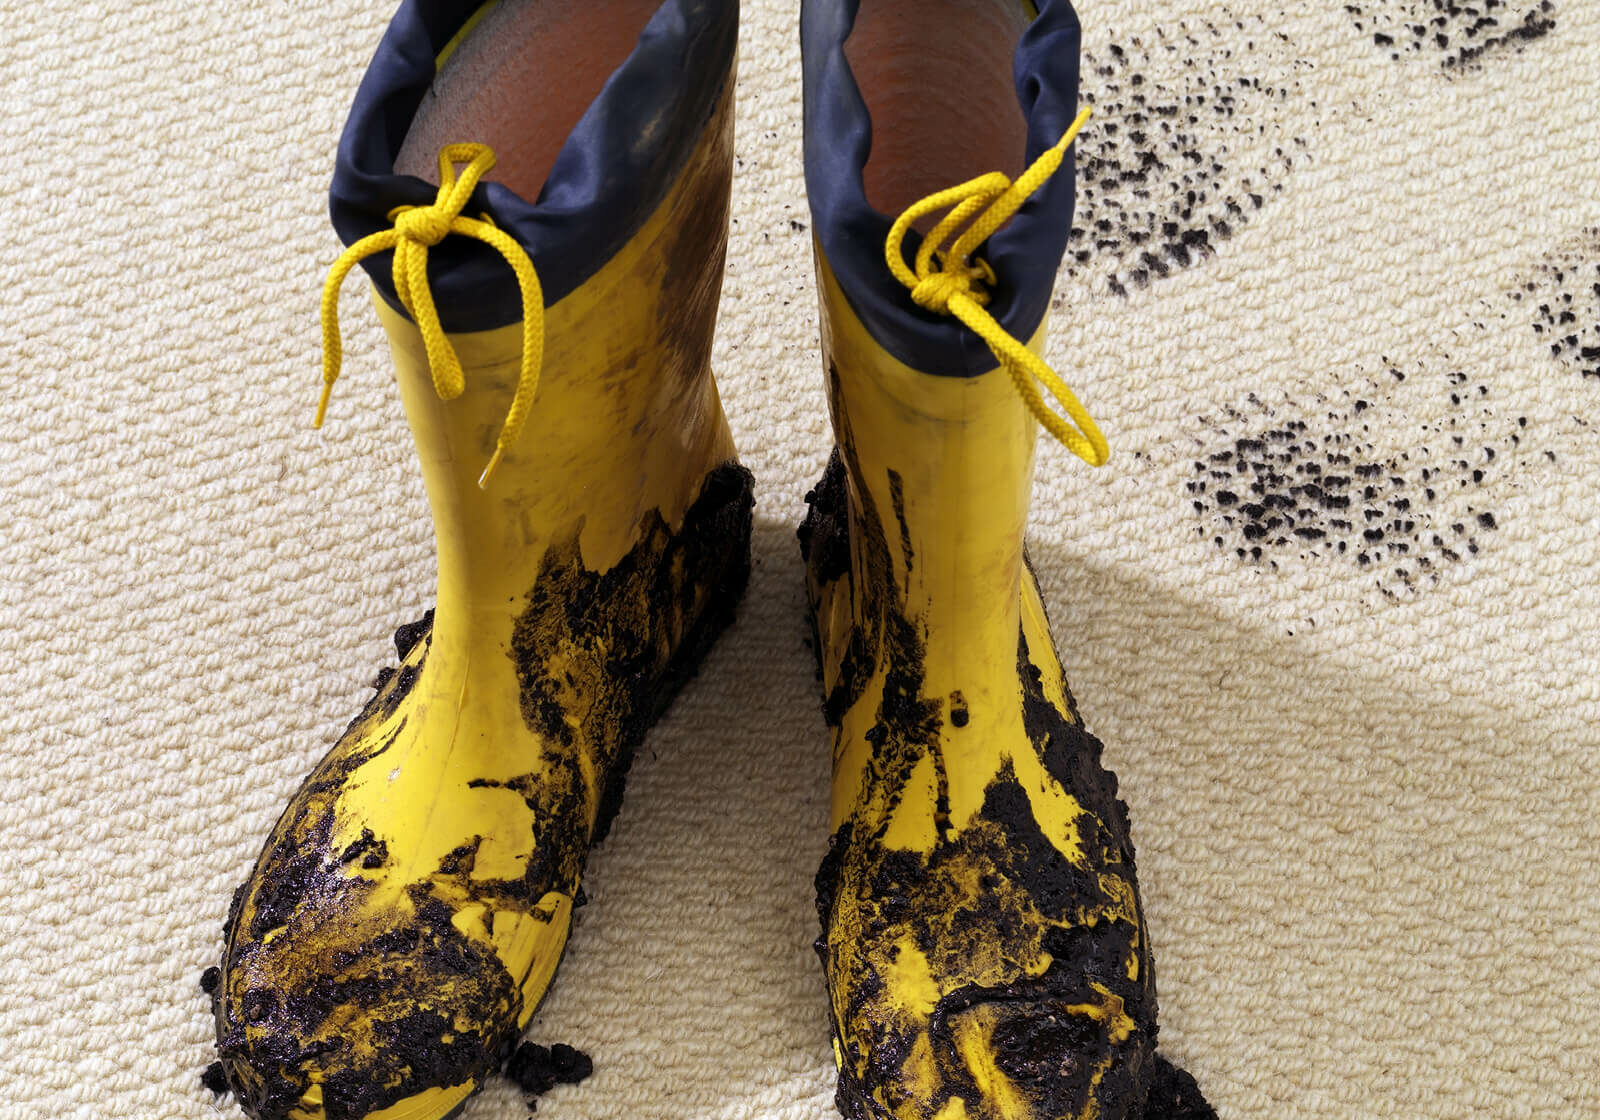 Muddy boots on carpeting | Carpetland USA